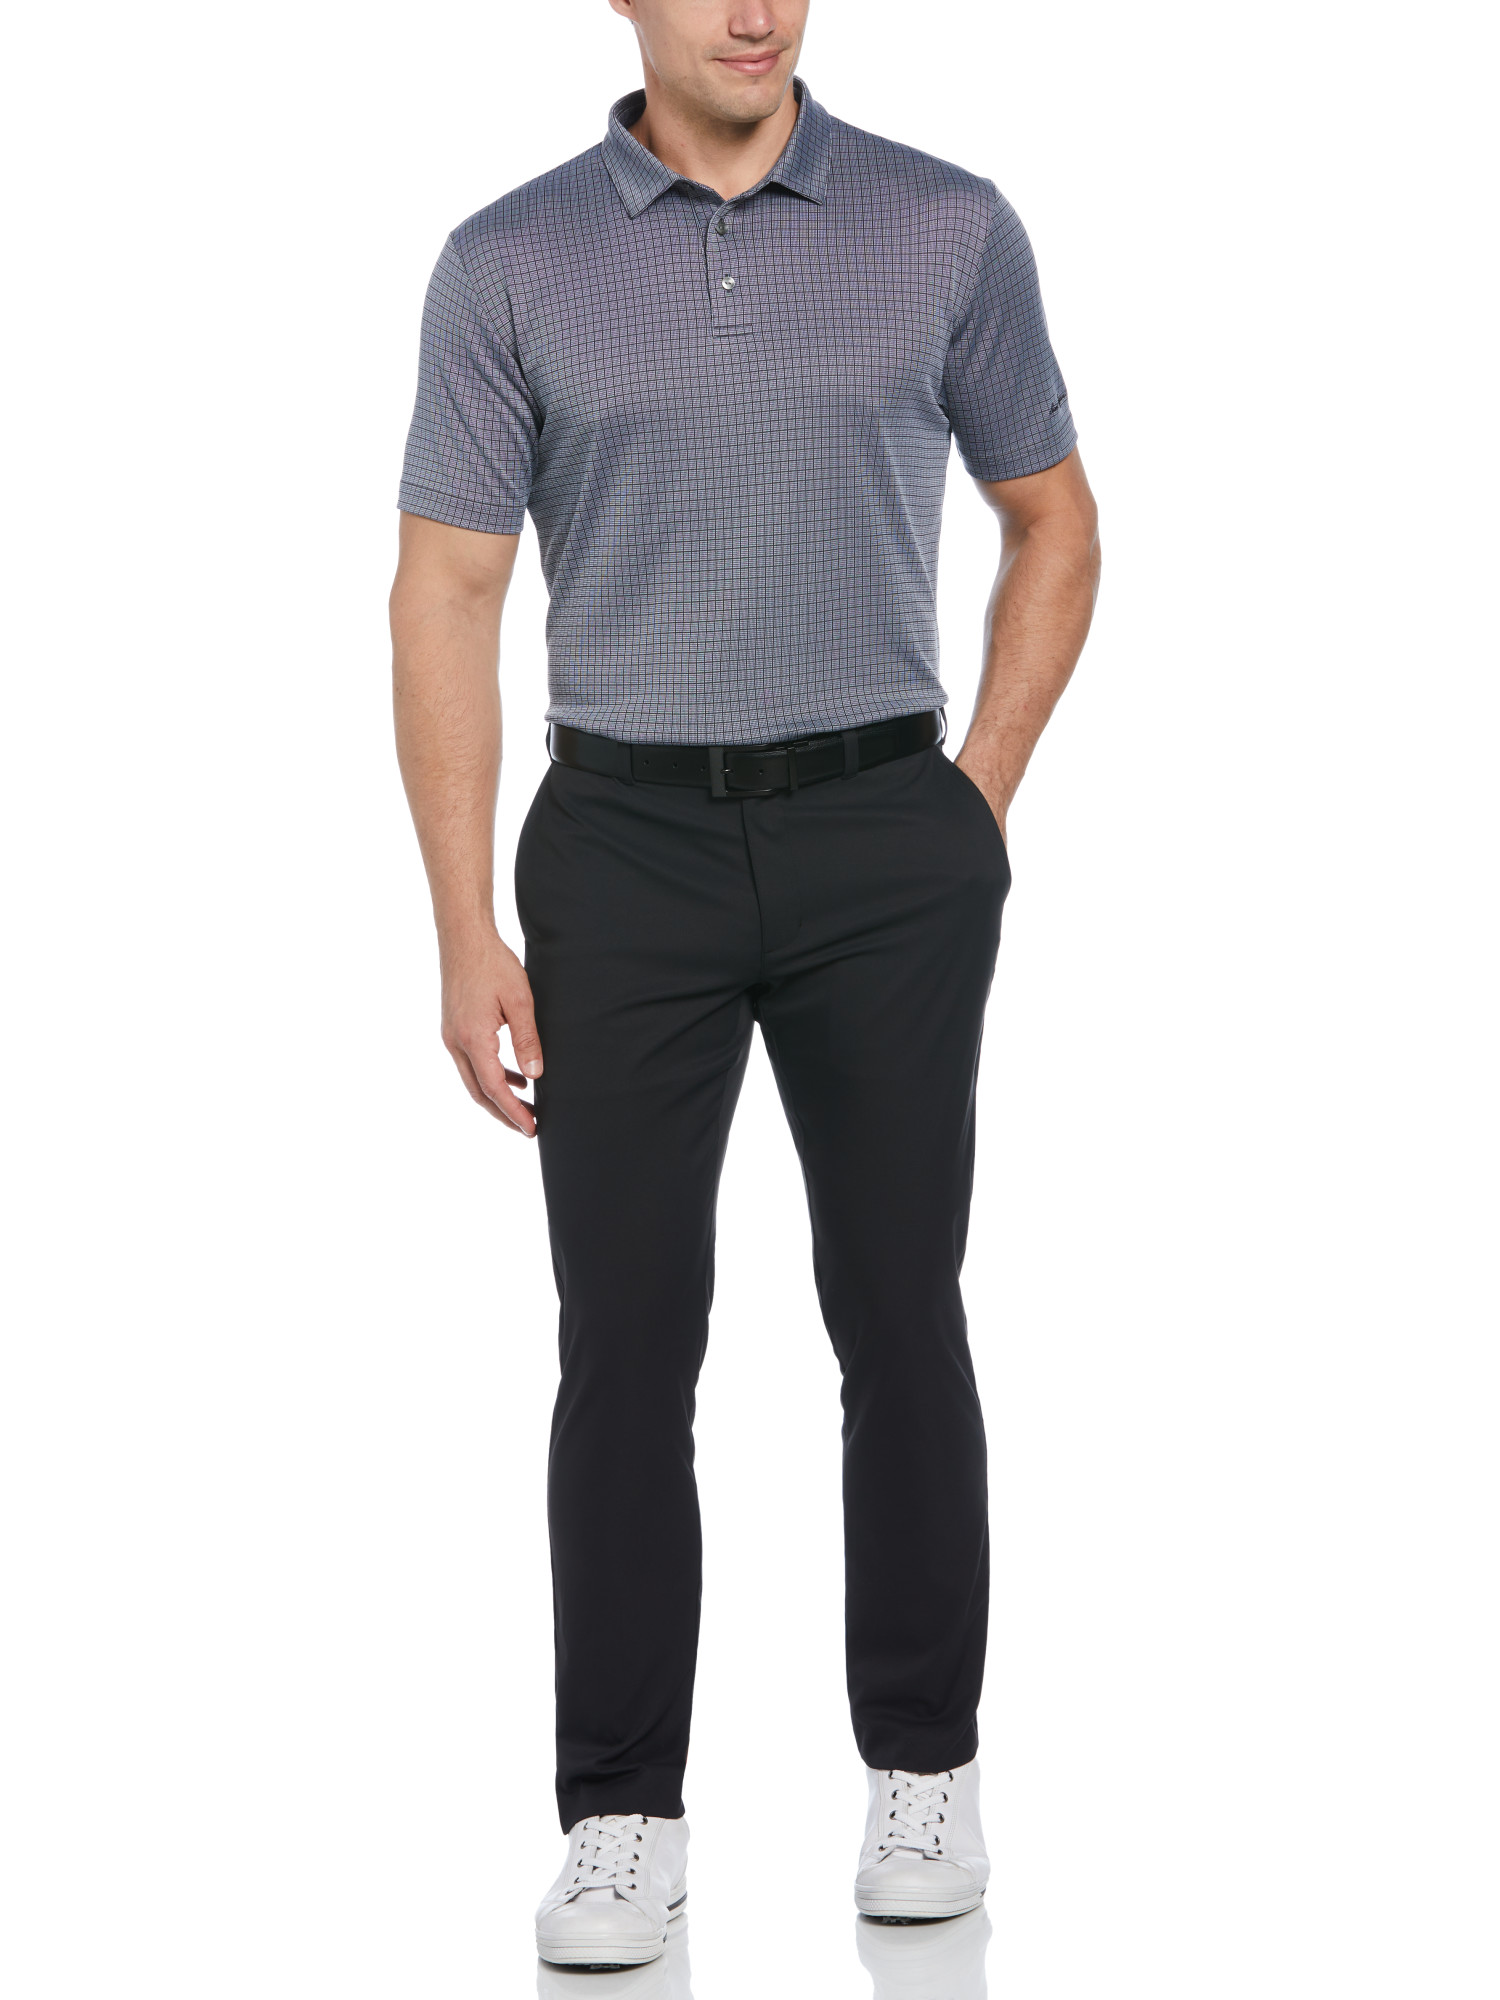 Ben Hogan Men's Flex 4-Way Stretch Golf Pants with Active Waistband, Sizes 30-50 - image 4 of 4